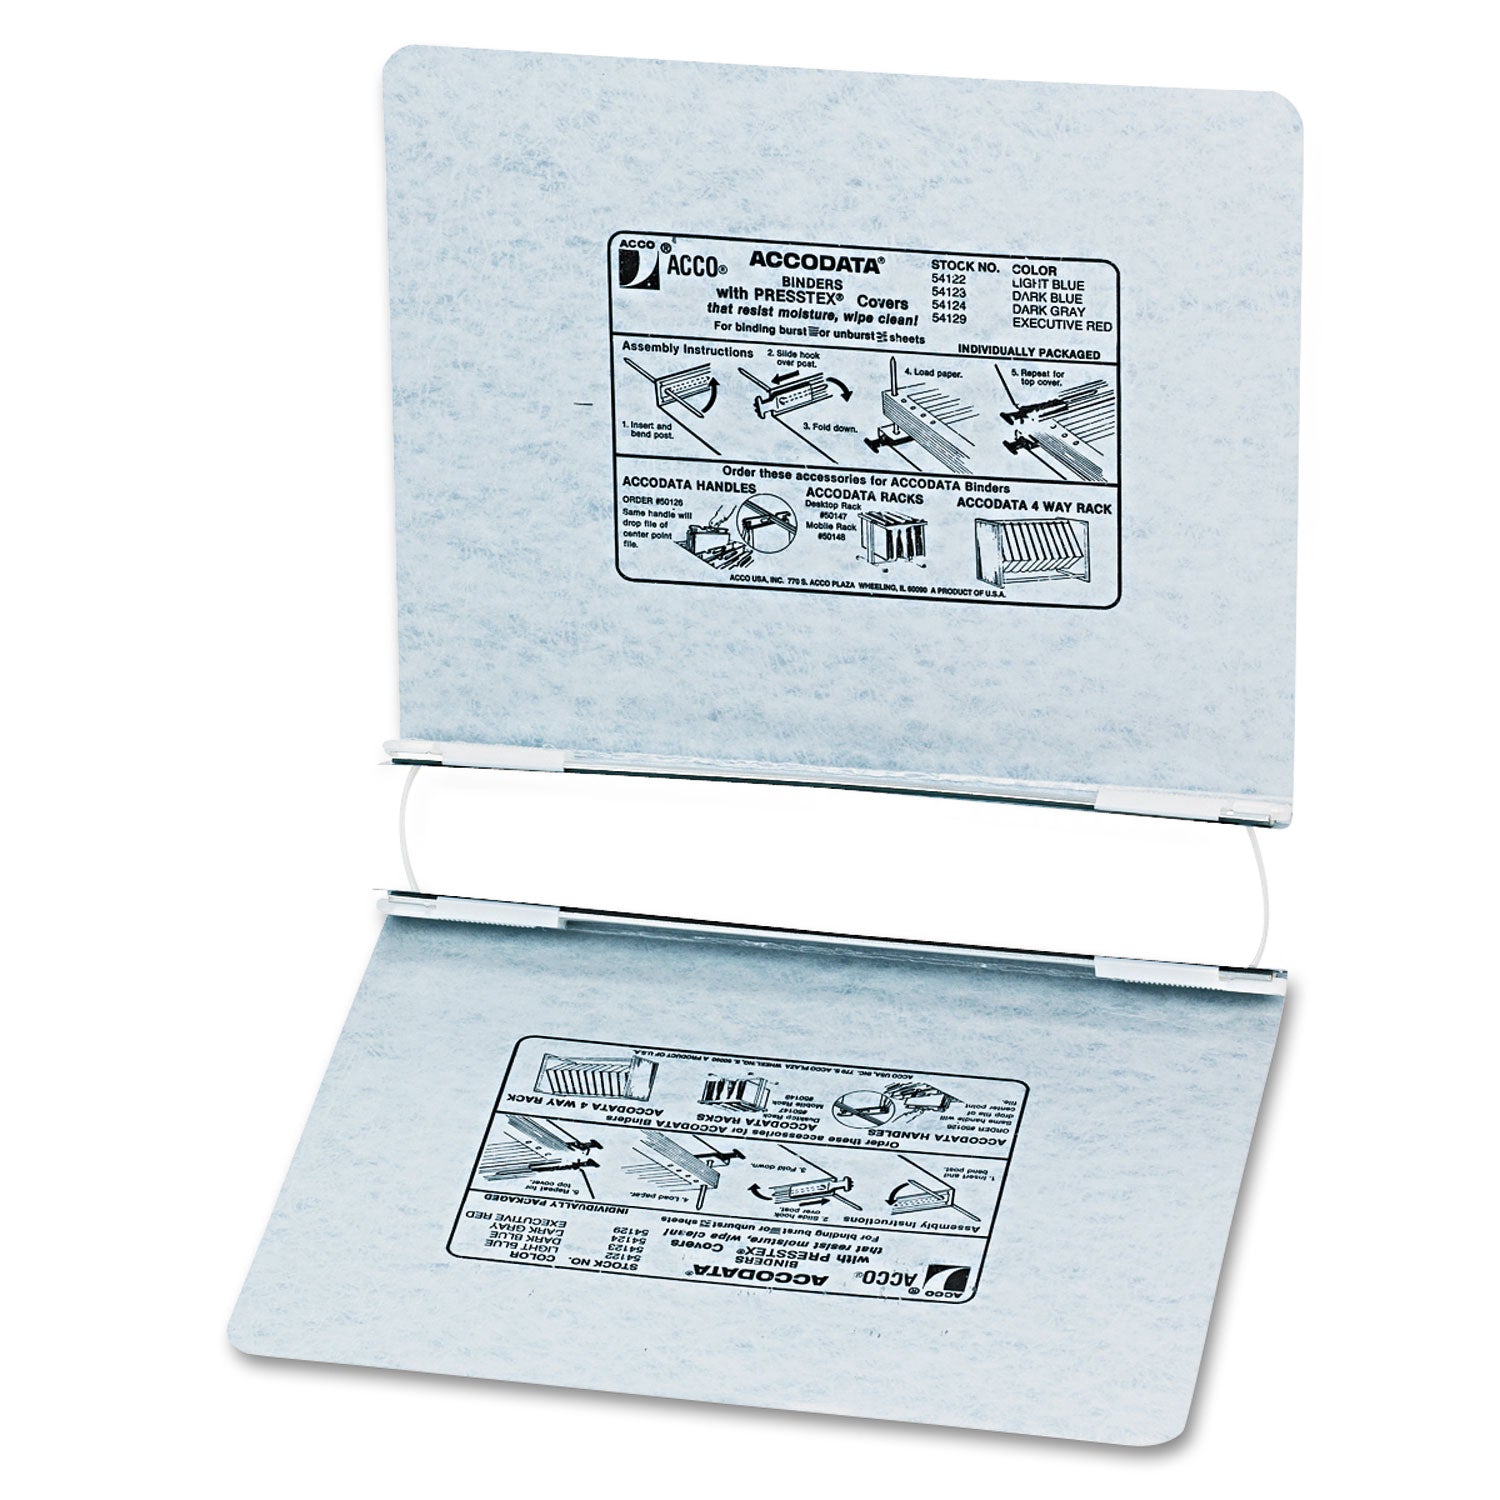 PRESSTEX Covers with Storage Hooks, 2 Posts, 6" Capacity, 11 x 8.5, Light Gray - 